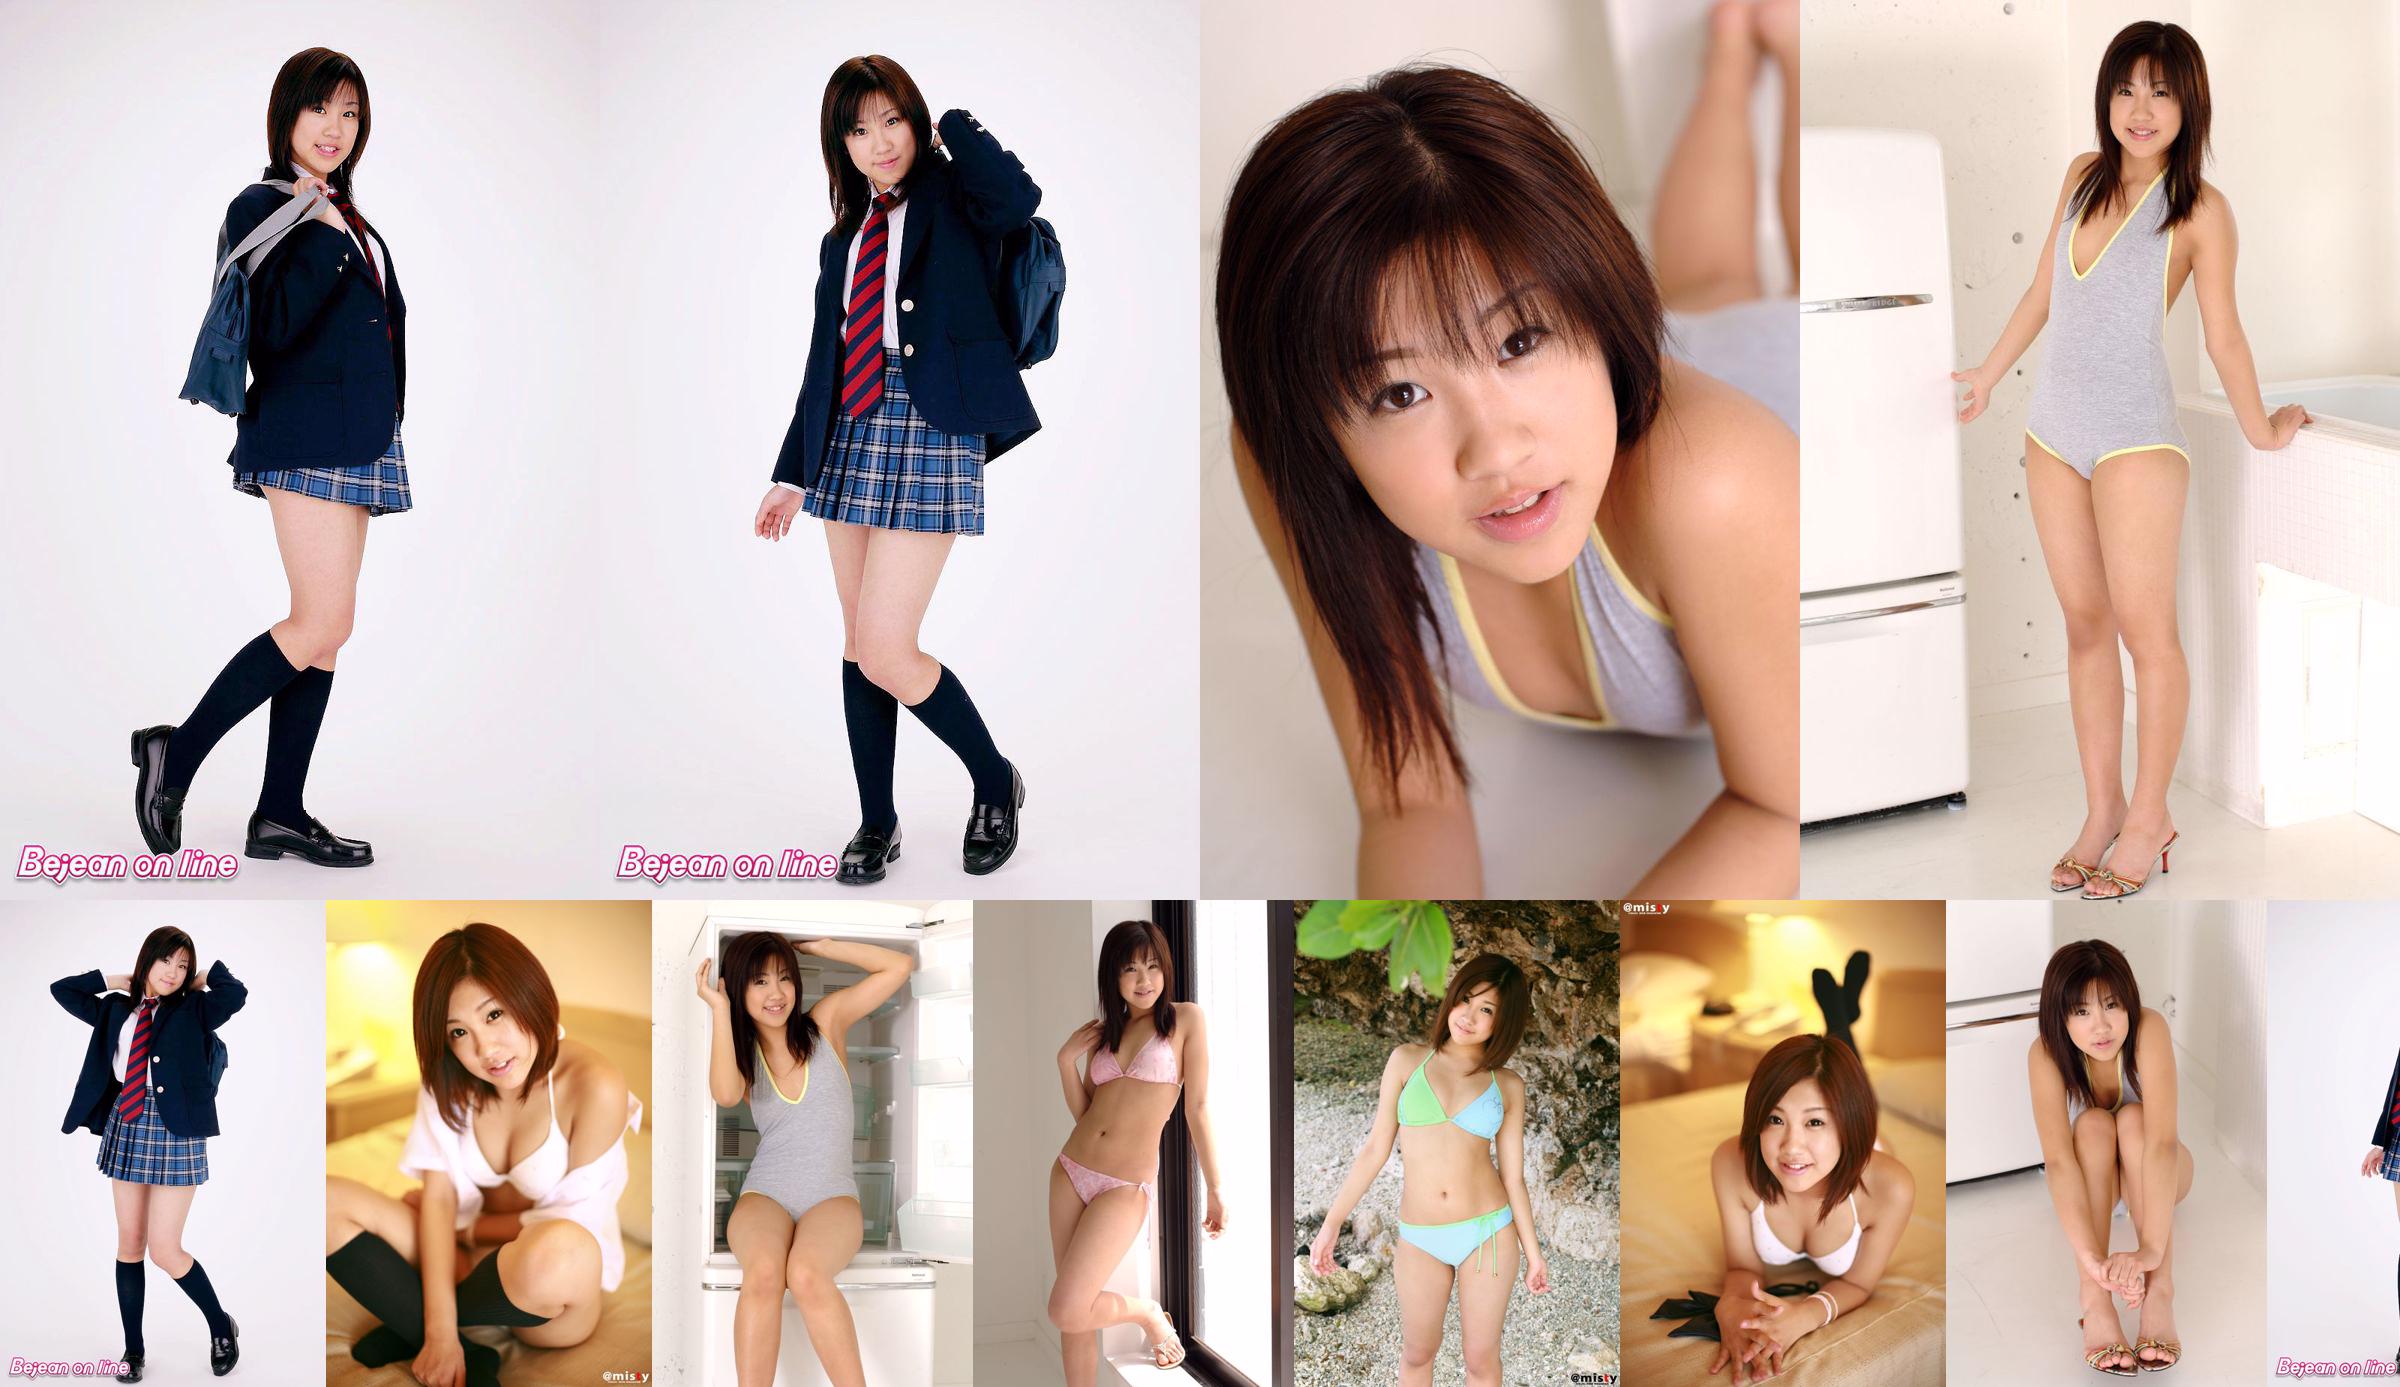 Scuola privata femminile Bejean Maho Nagase Maho Nagase [Bejean On Line] No.54e6b6 Pagina 31